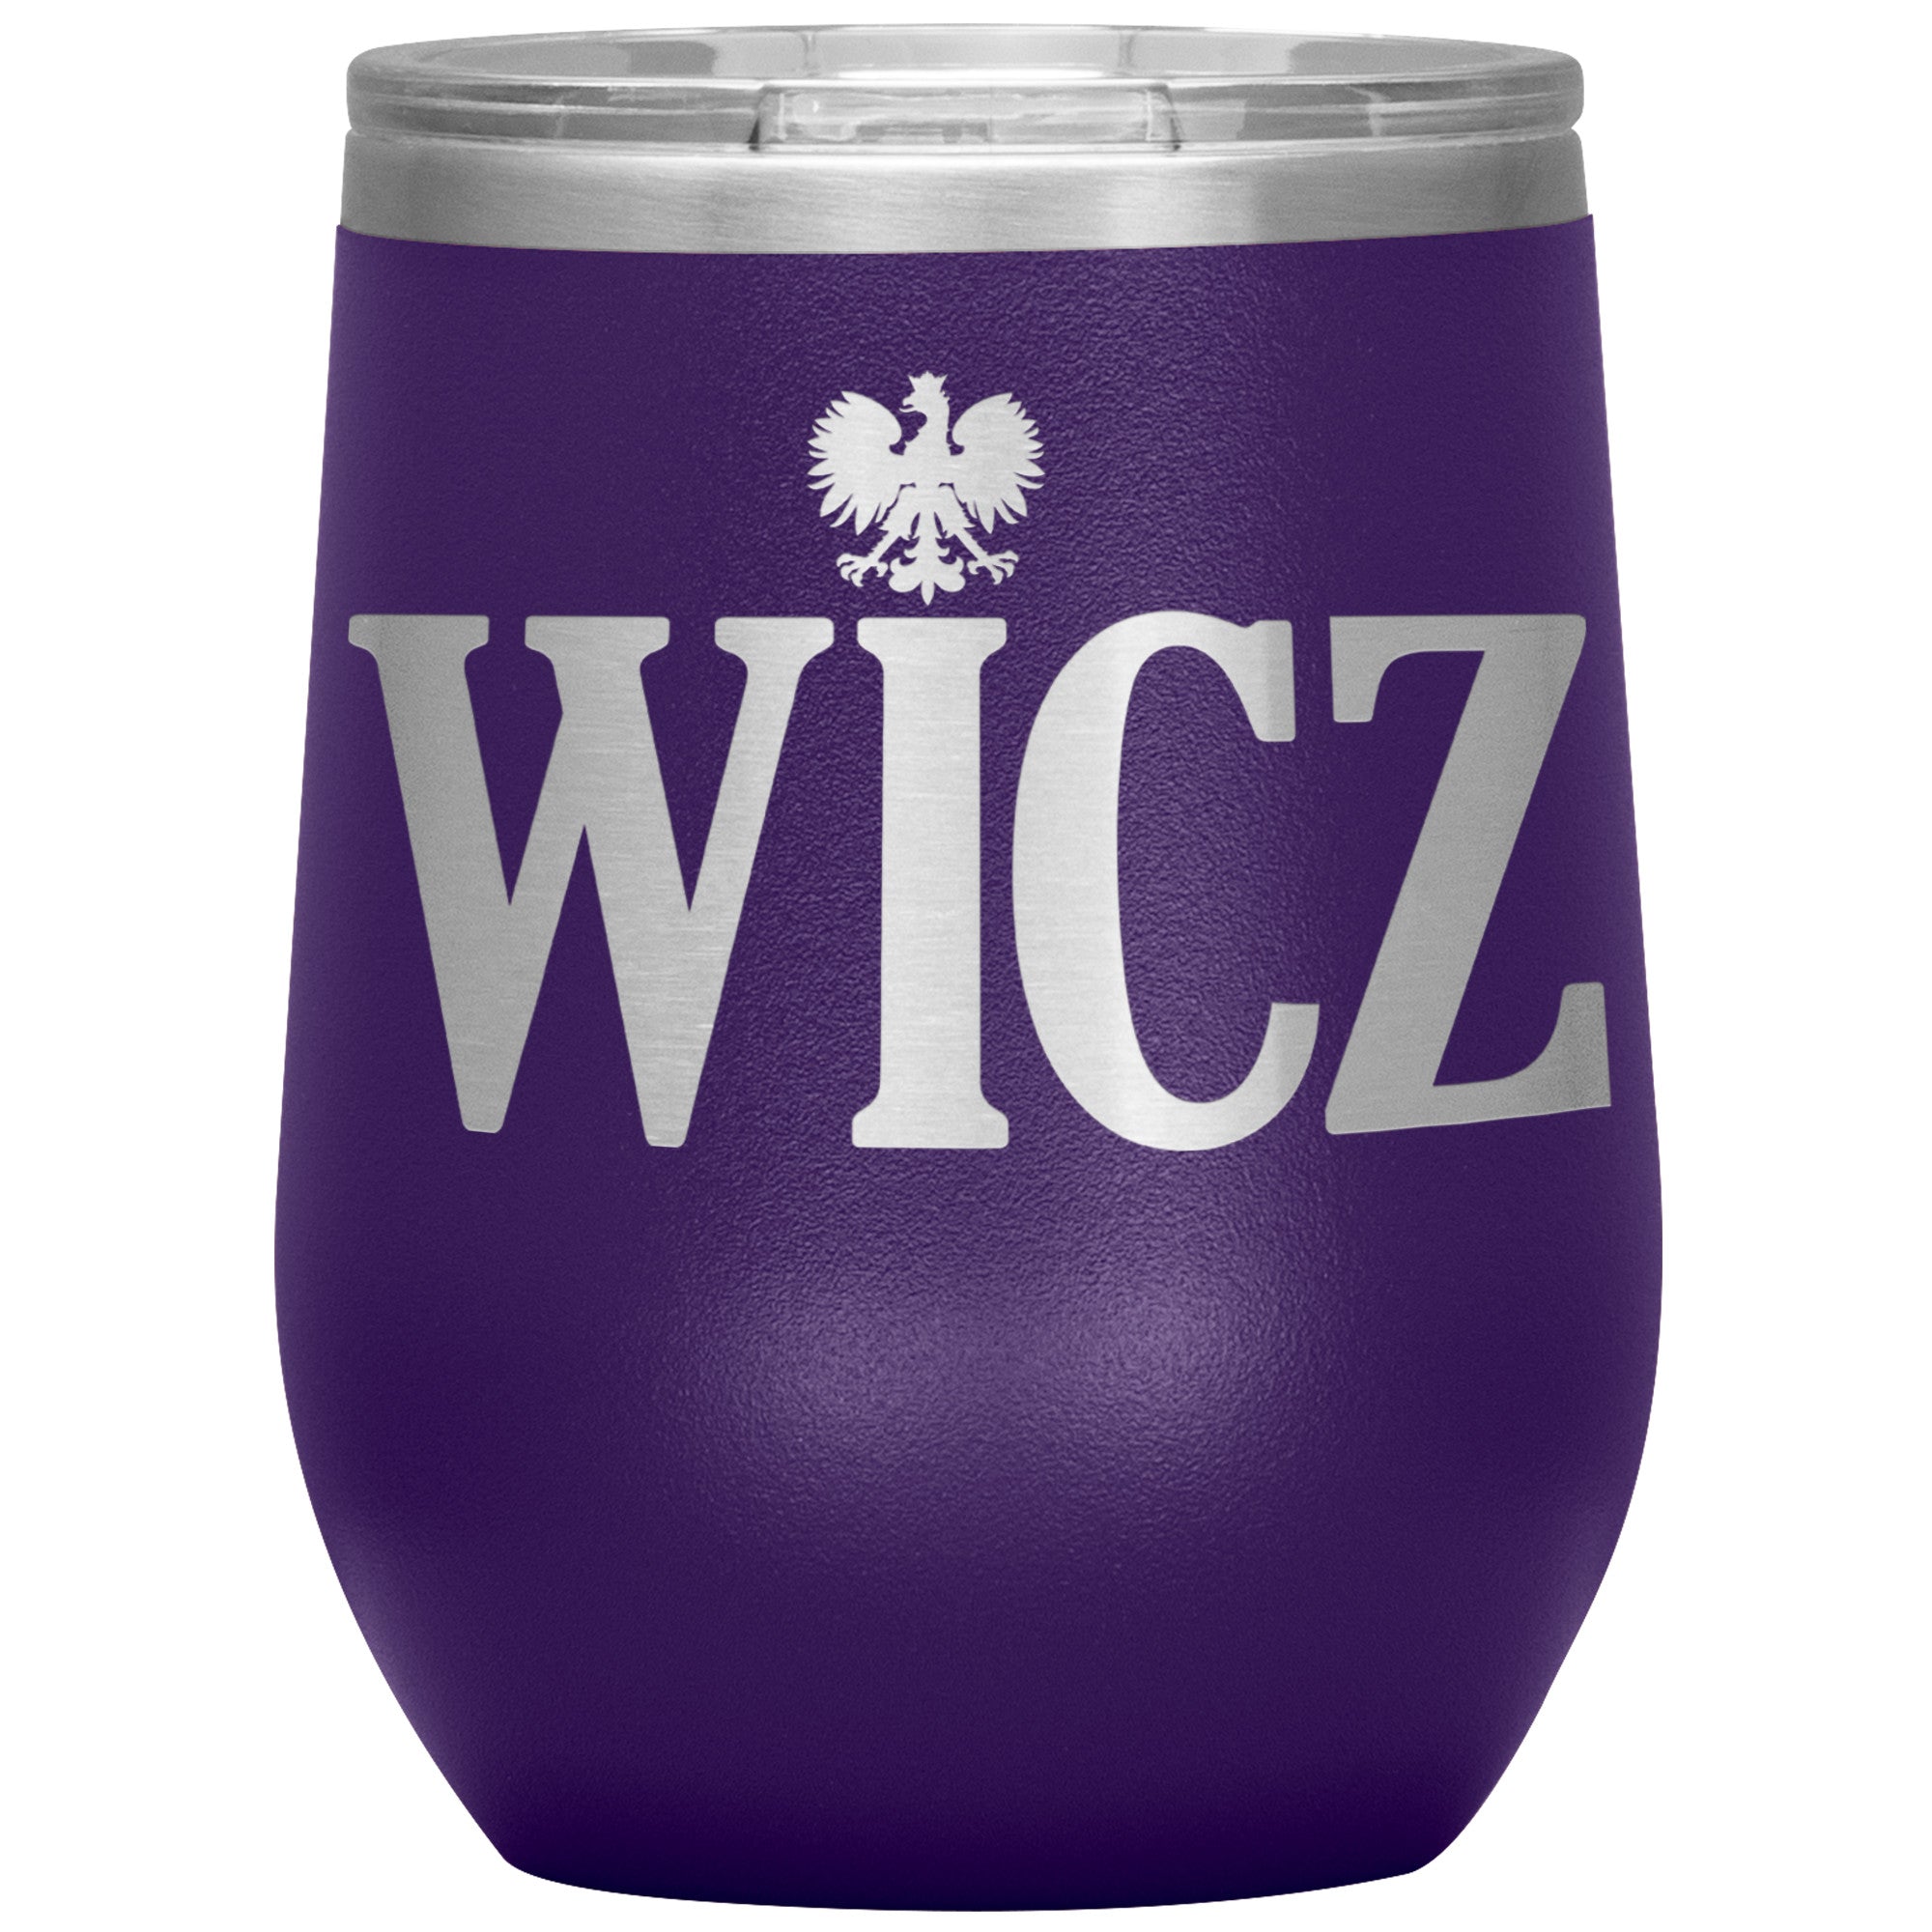 Polish Surname Ending in WICZ Insulated Wine Tumbler Tumblers teelaunch Purple  